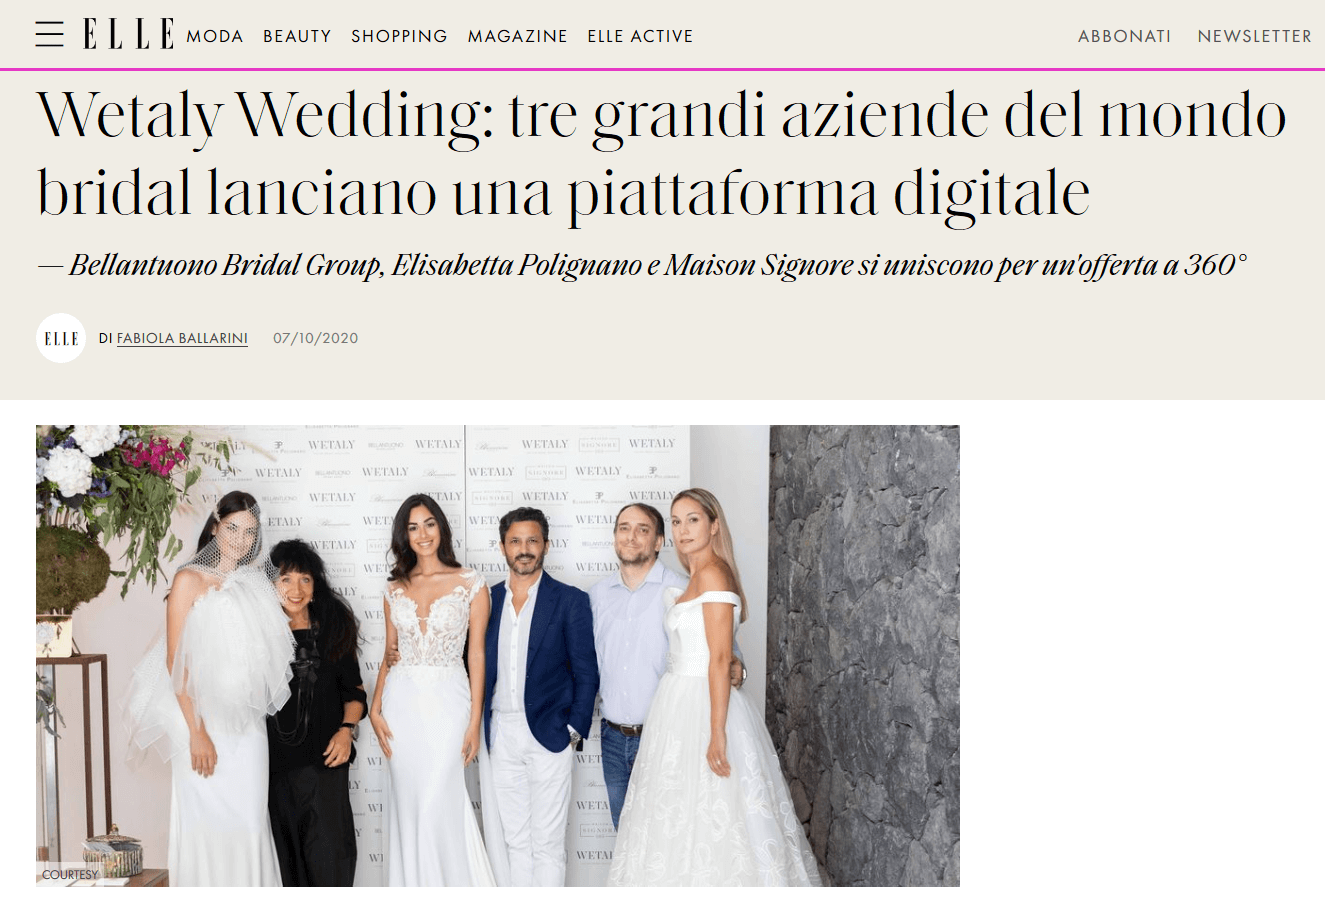 Wetaly Wedding: tre grandi aziende del mondo bridal lanciano una piattaforma digitale